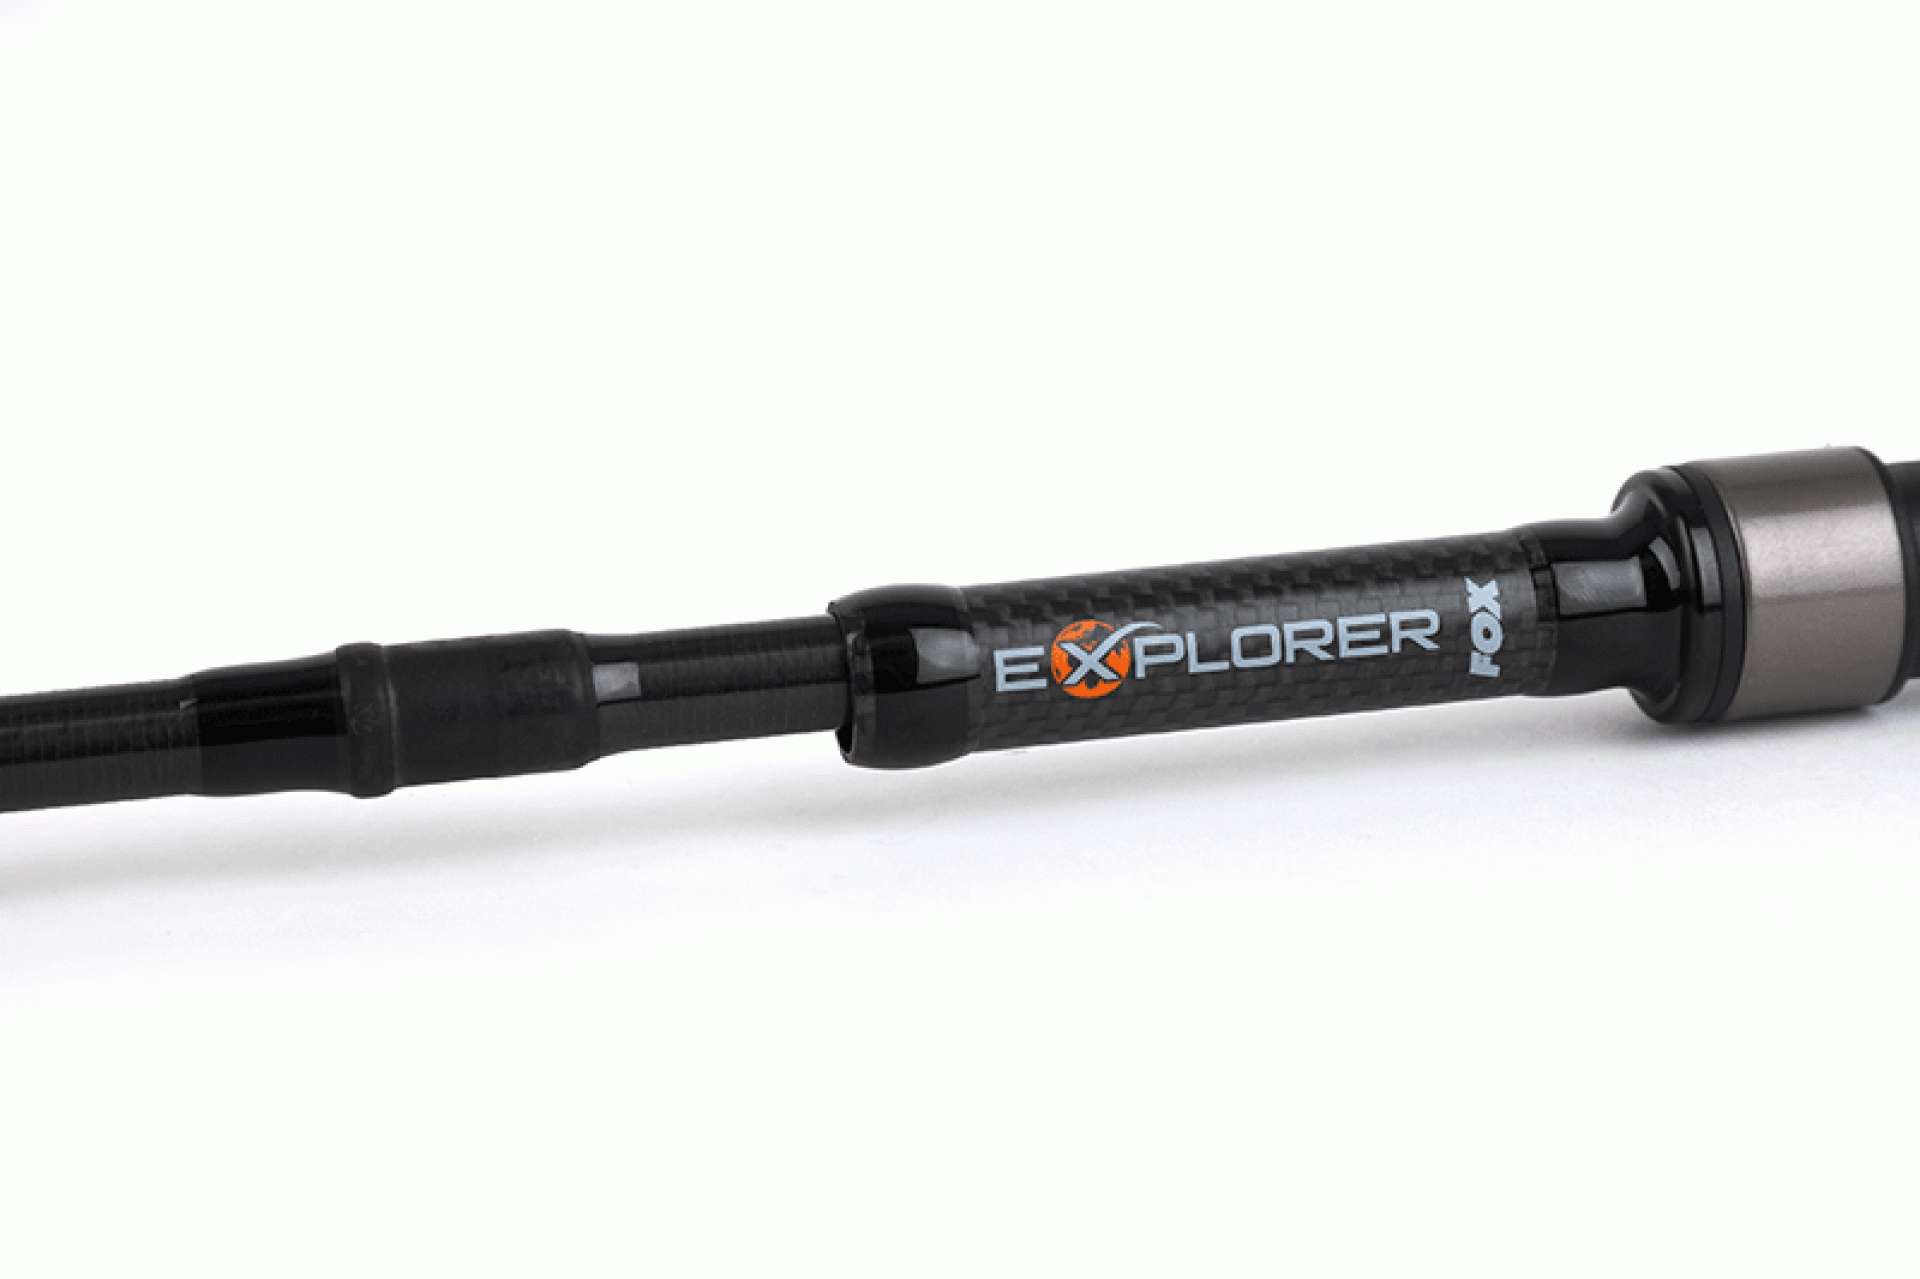 Fox Explorer Rods